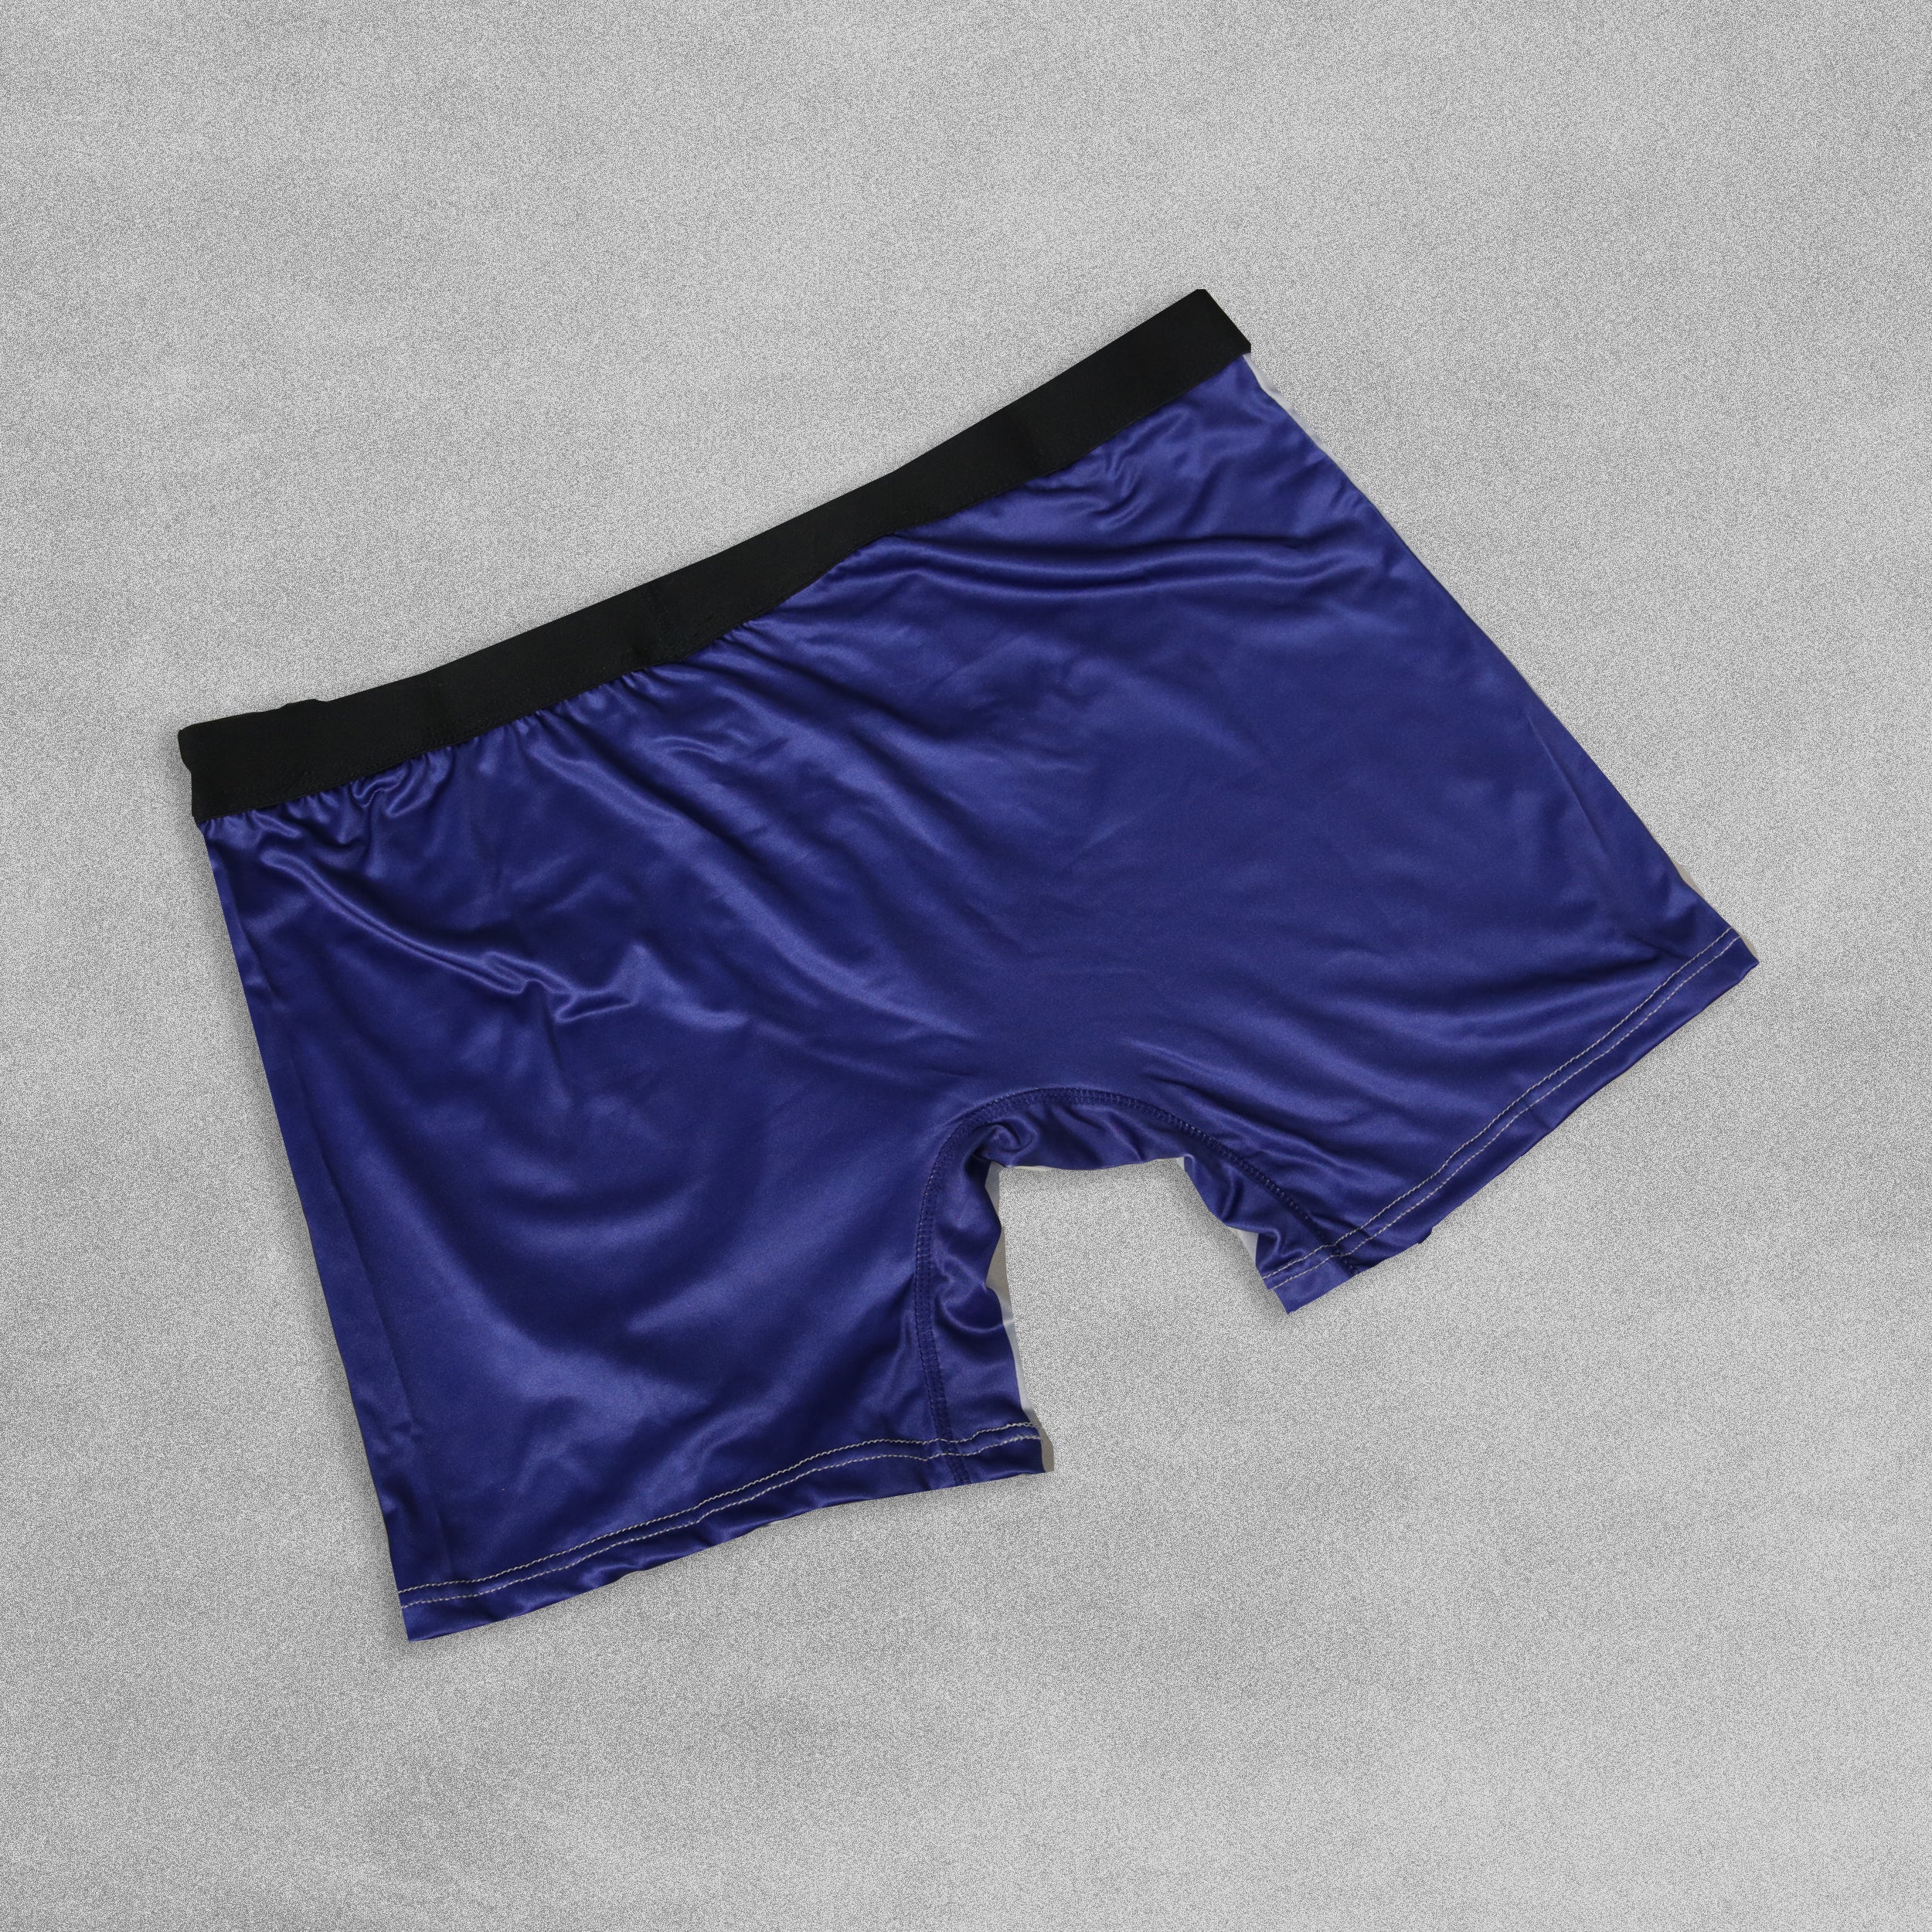 Mens Novelty Boxer Shorts - Size Matters!